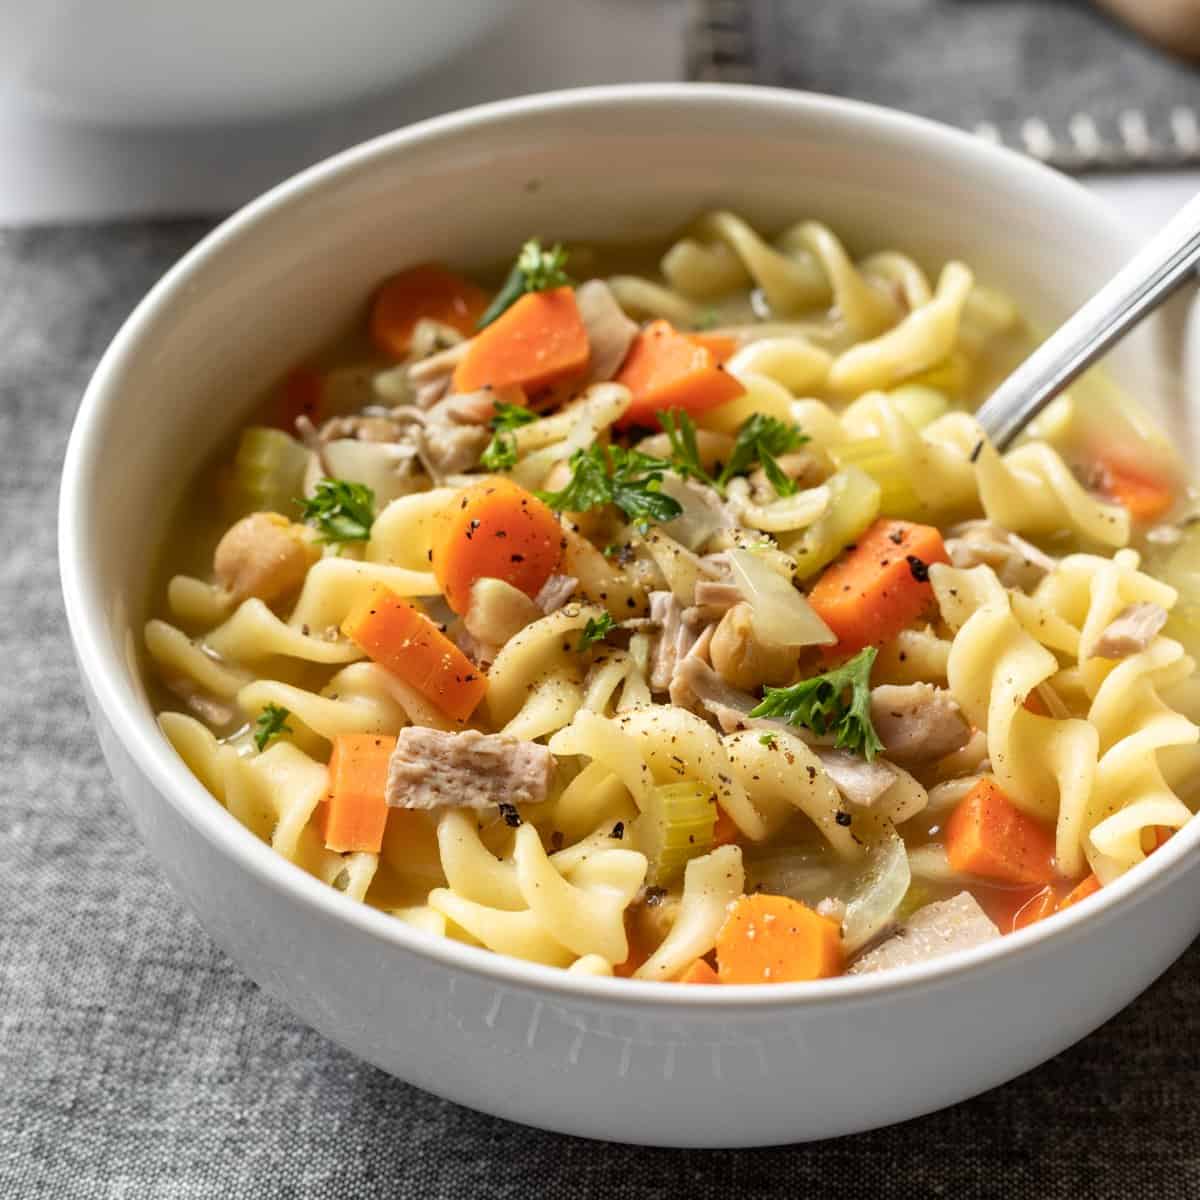 https://myquietkitchen.com/wp-content/uploads/2021/07/vegan-chicken-noodle-soup-2.jpg